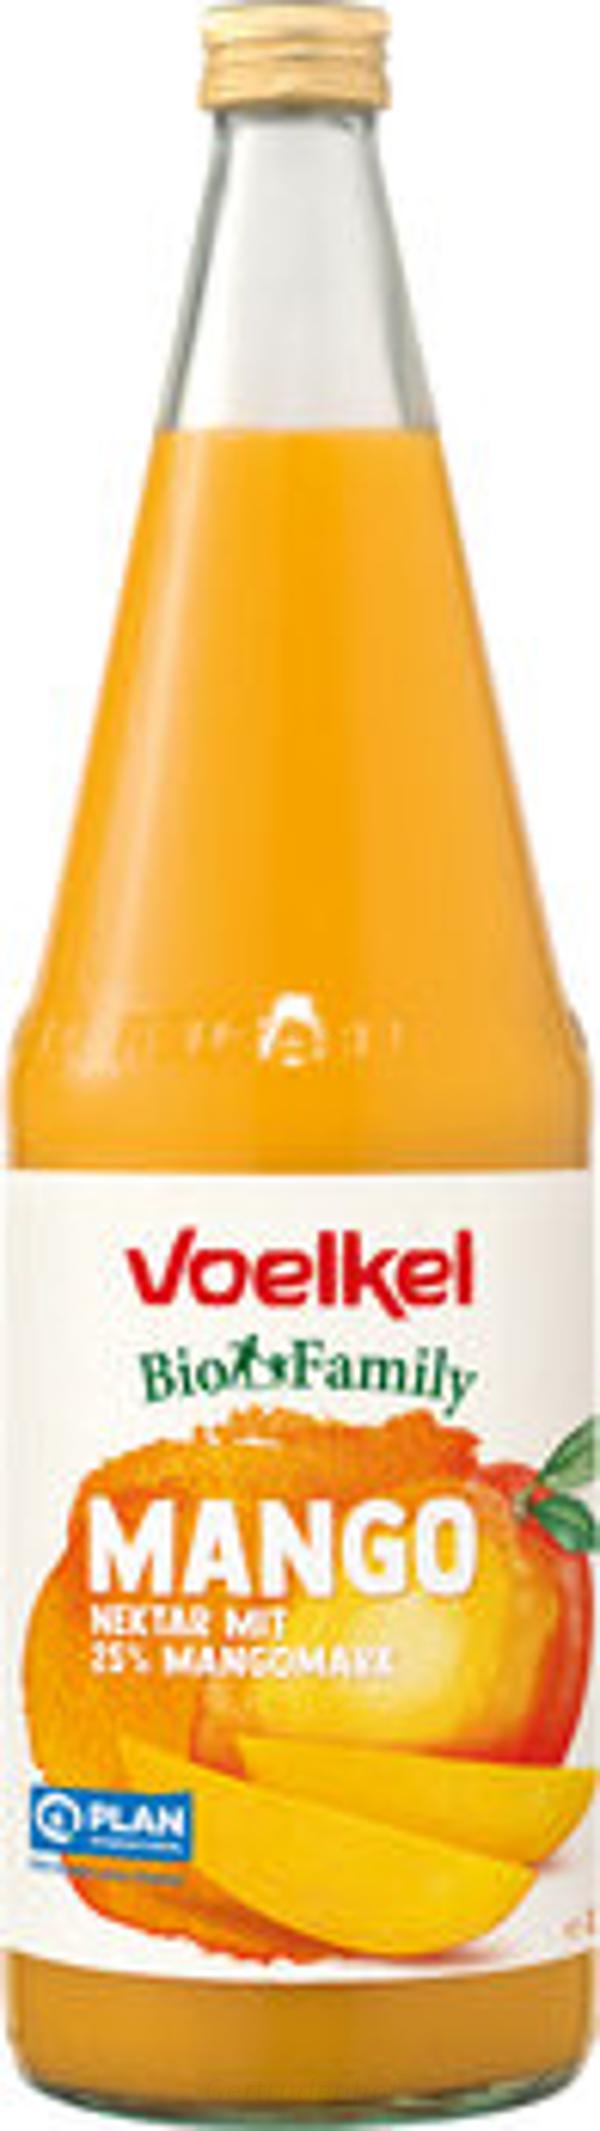 Produktfoto zu Voelkel family Mango 1 l (VOE)